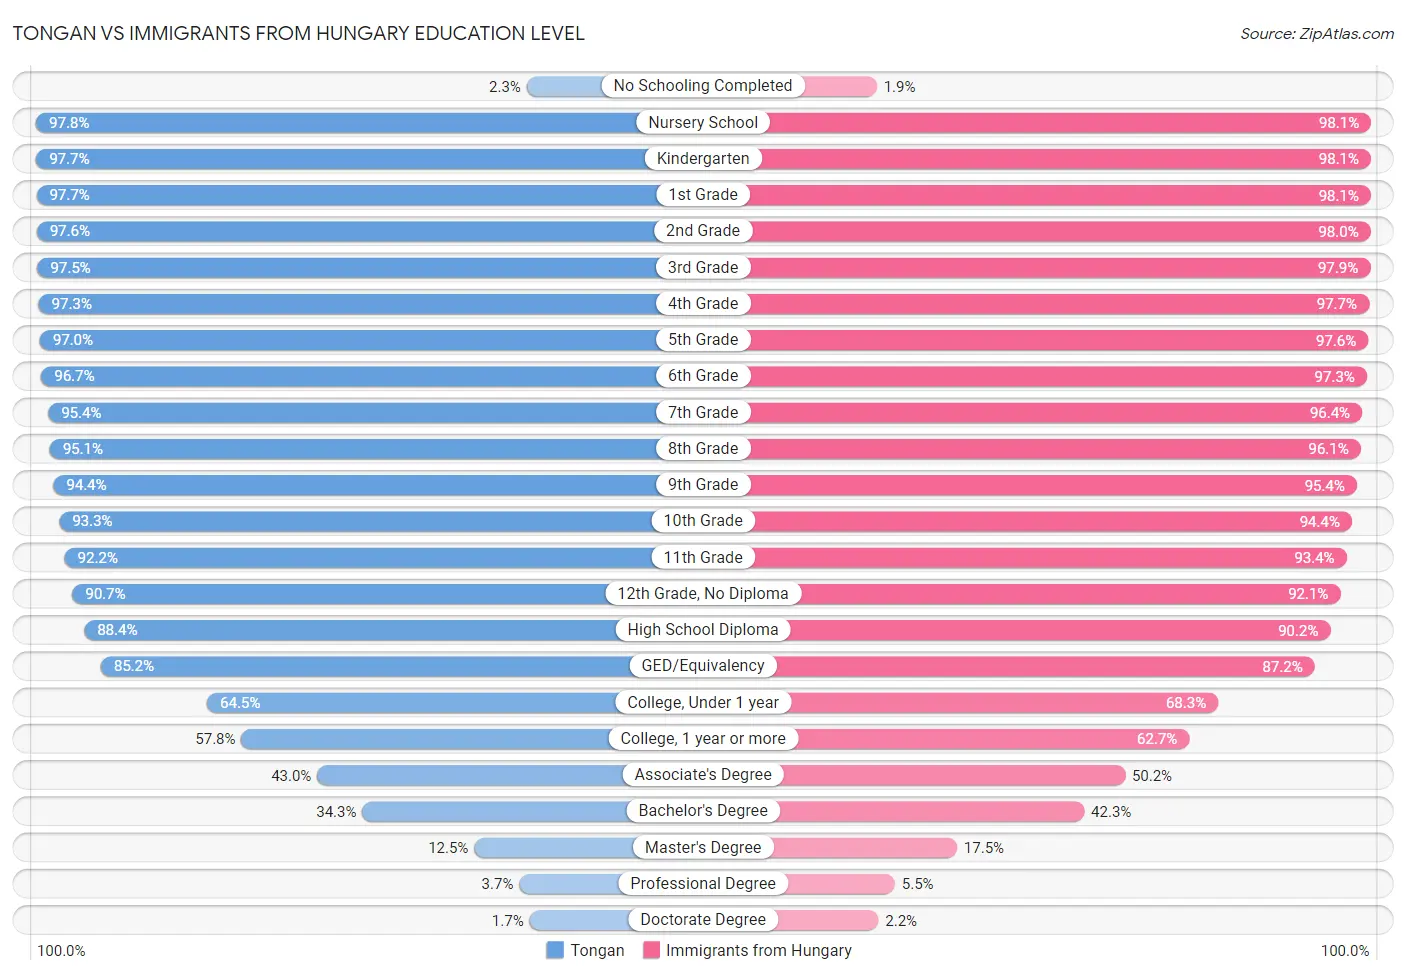 Tongan vs Immigrants from Hungary Education Level